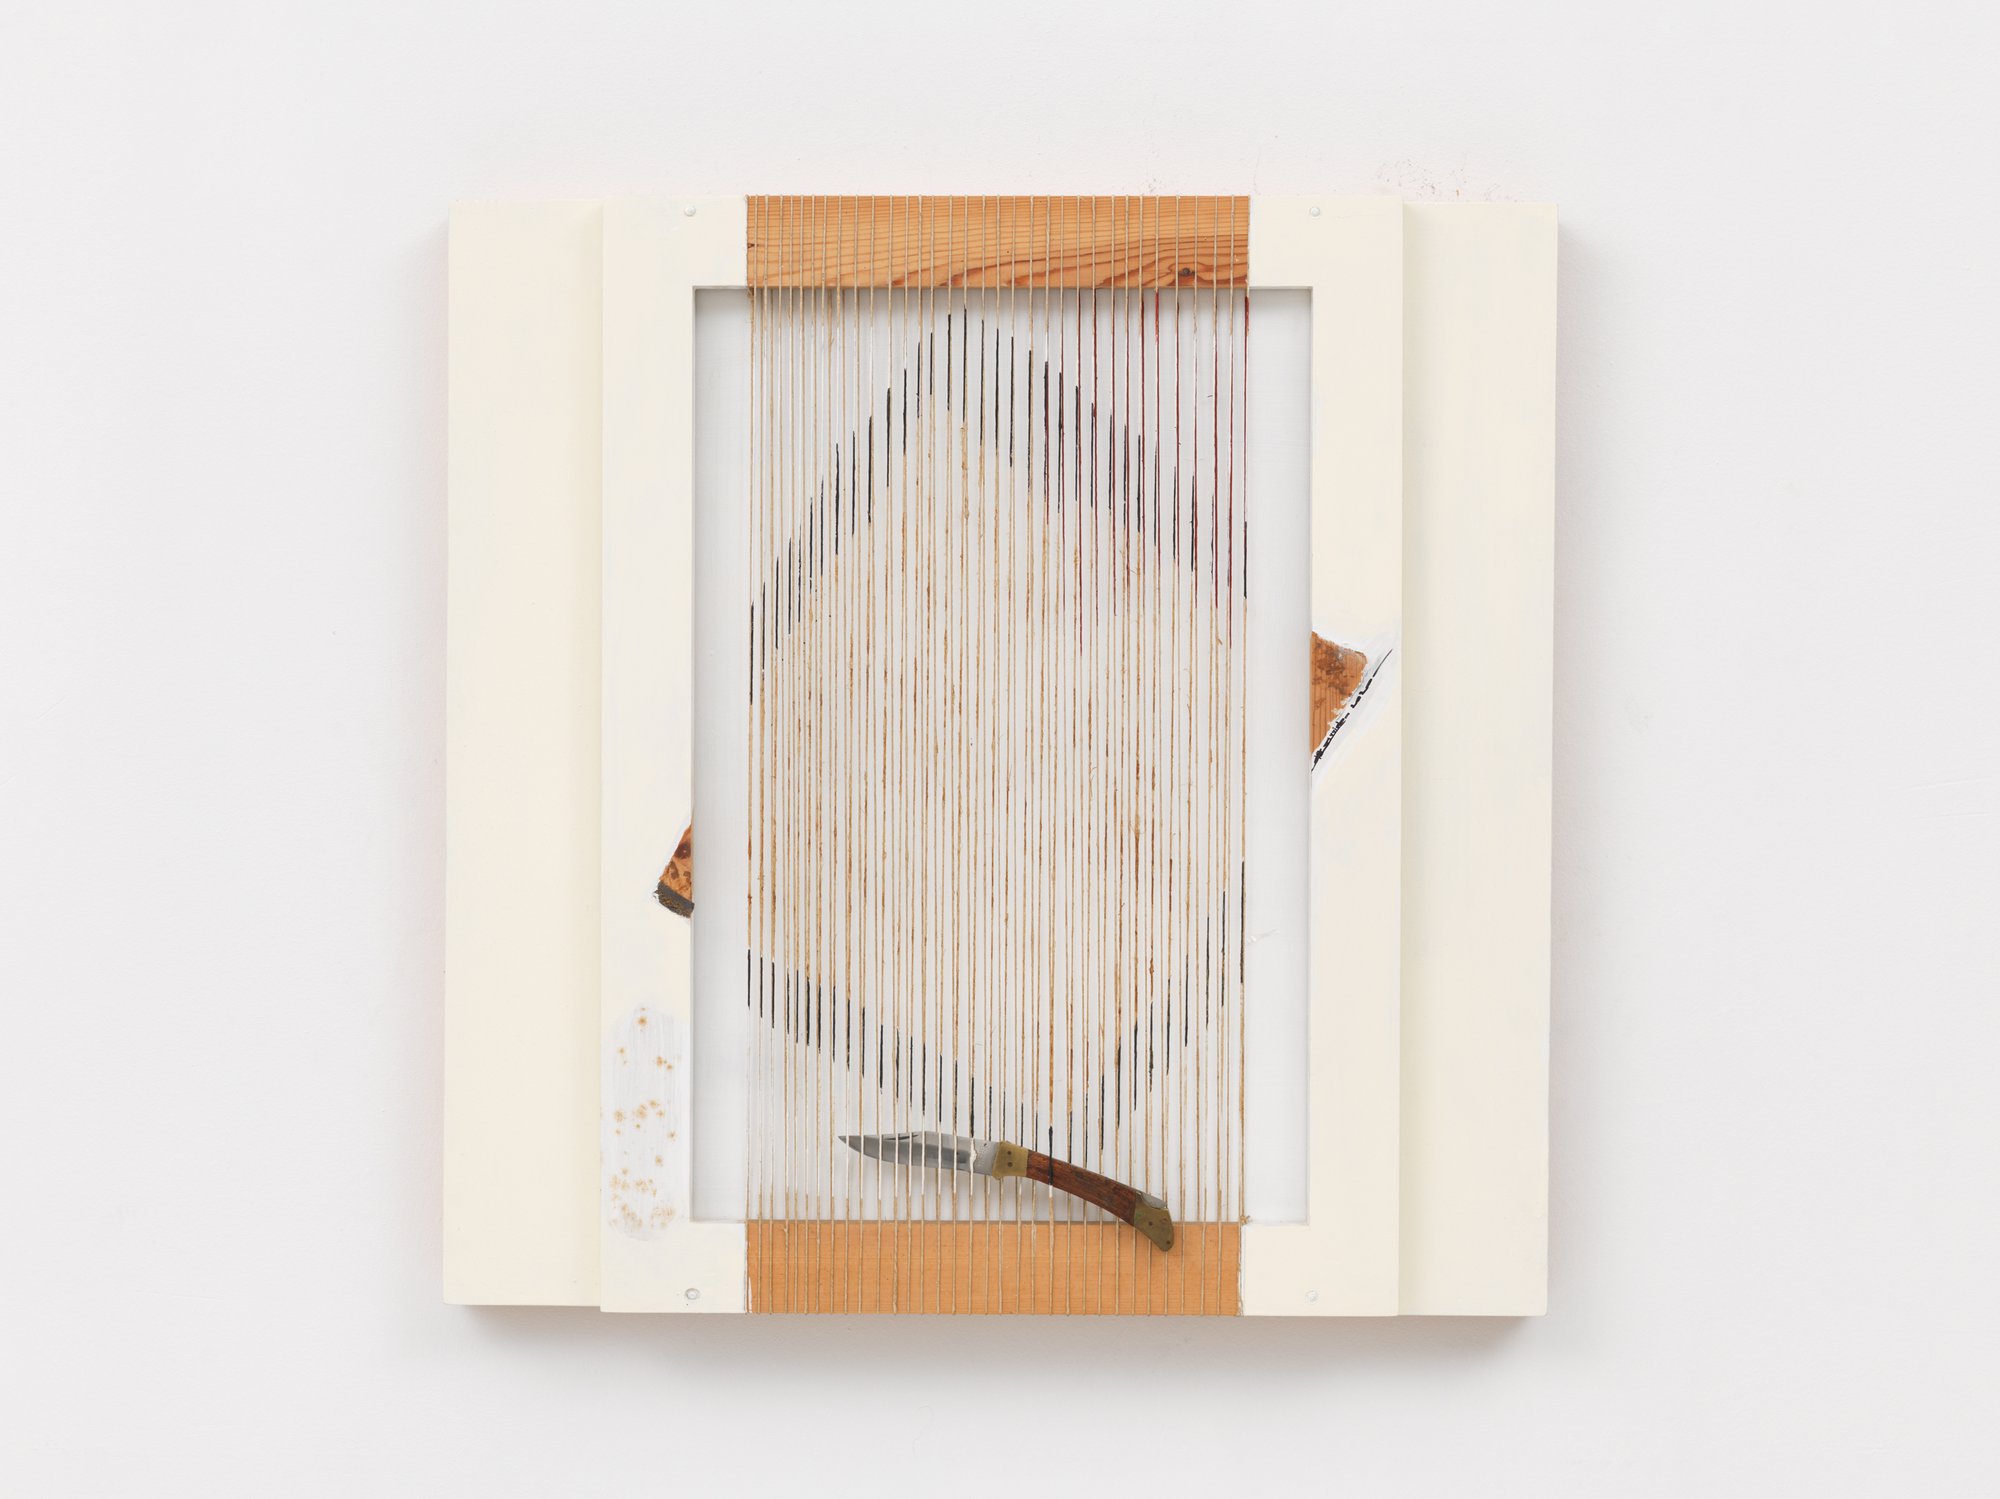 Koula Savvidou, Untitled, wood, string, picket knife, oil paint, 70 x 70 x 10.5 cm, 2021